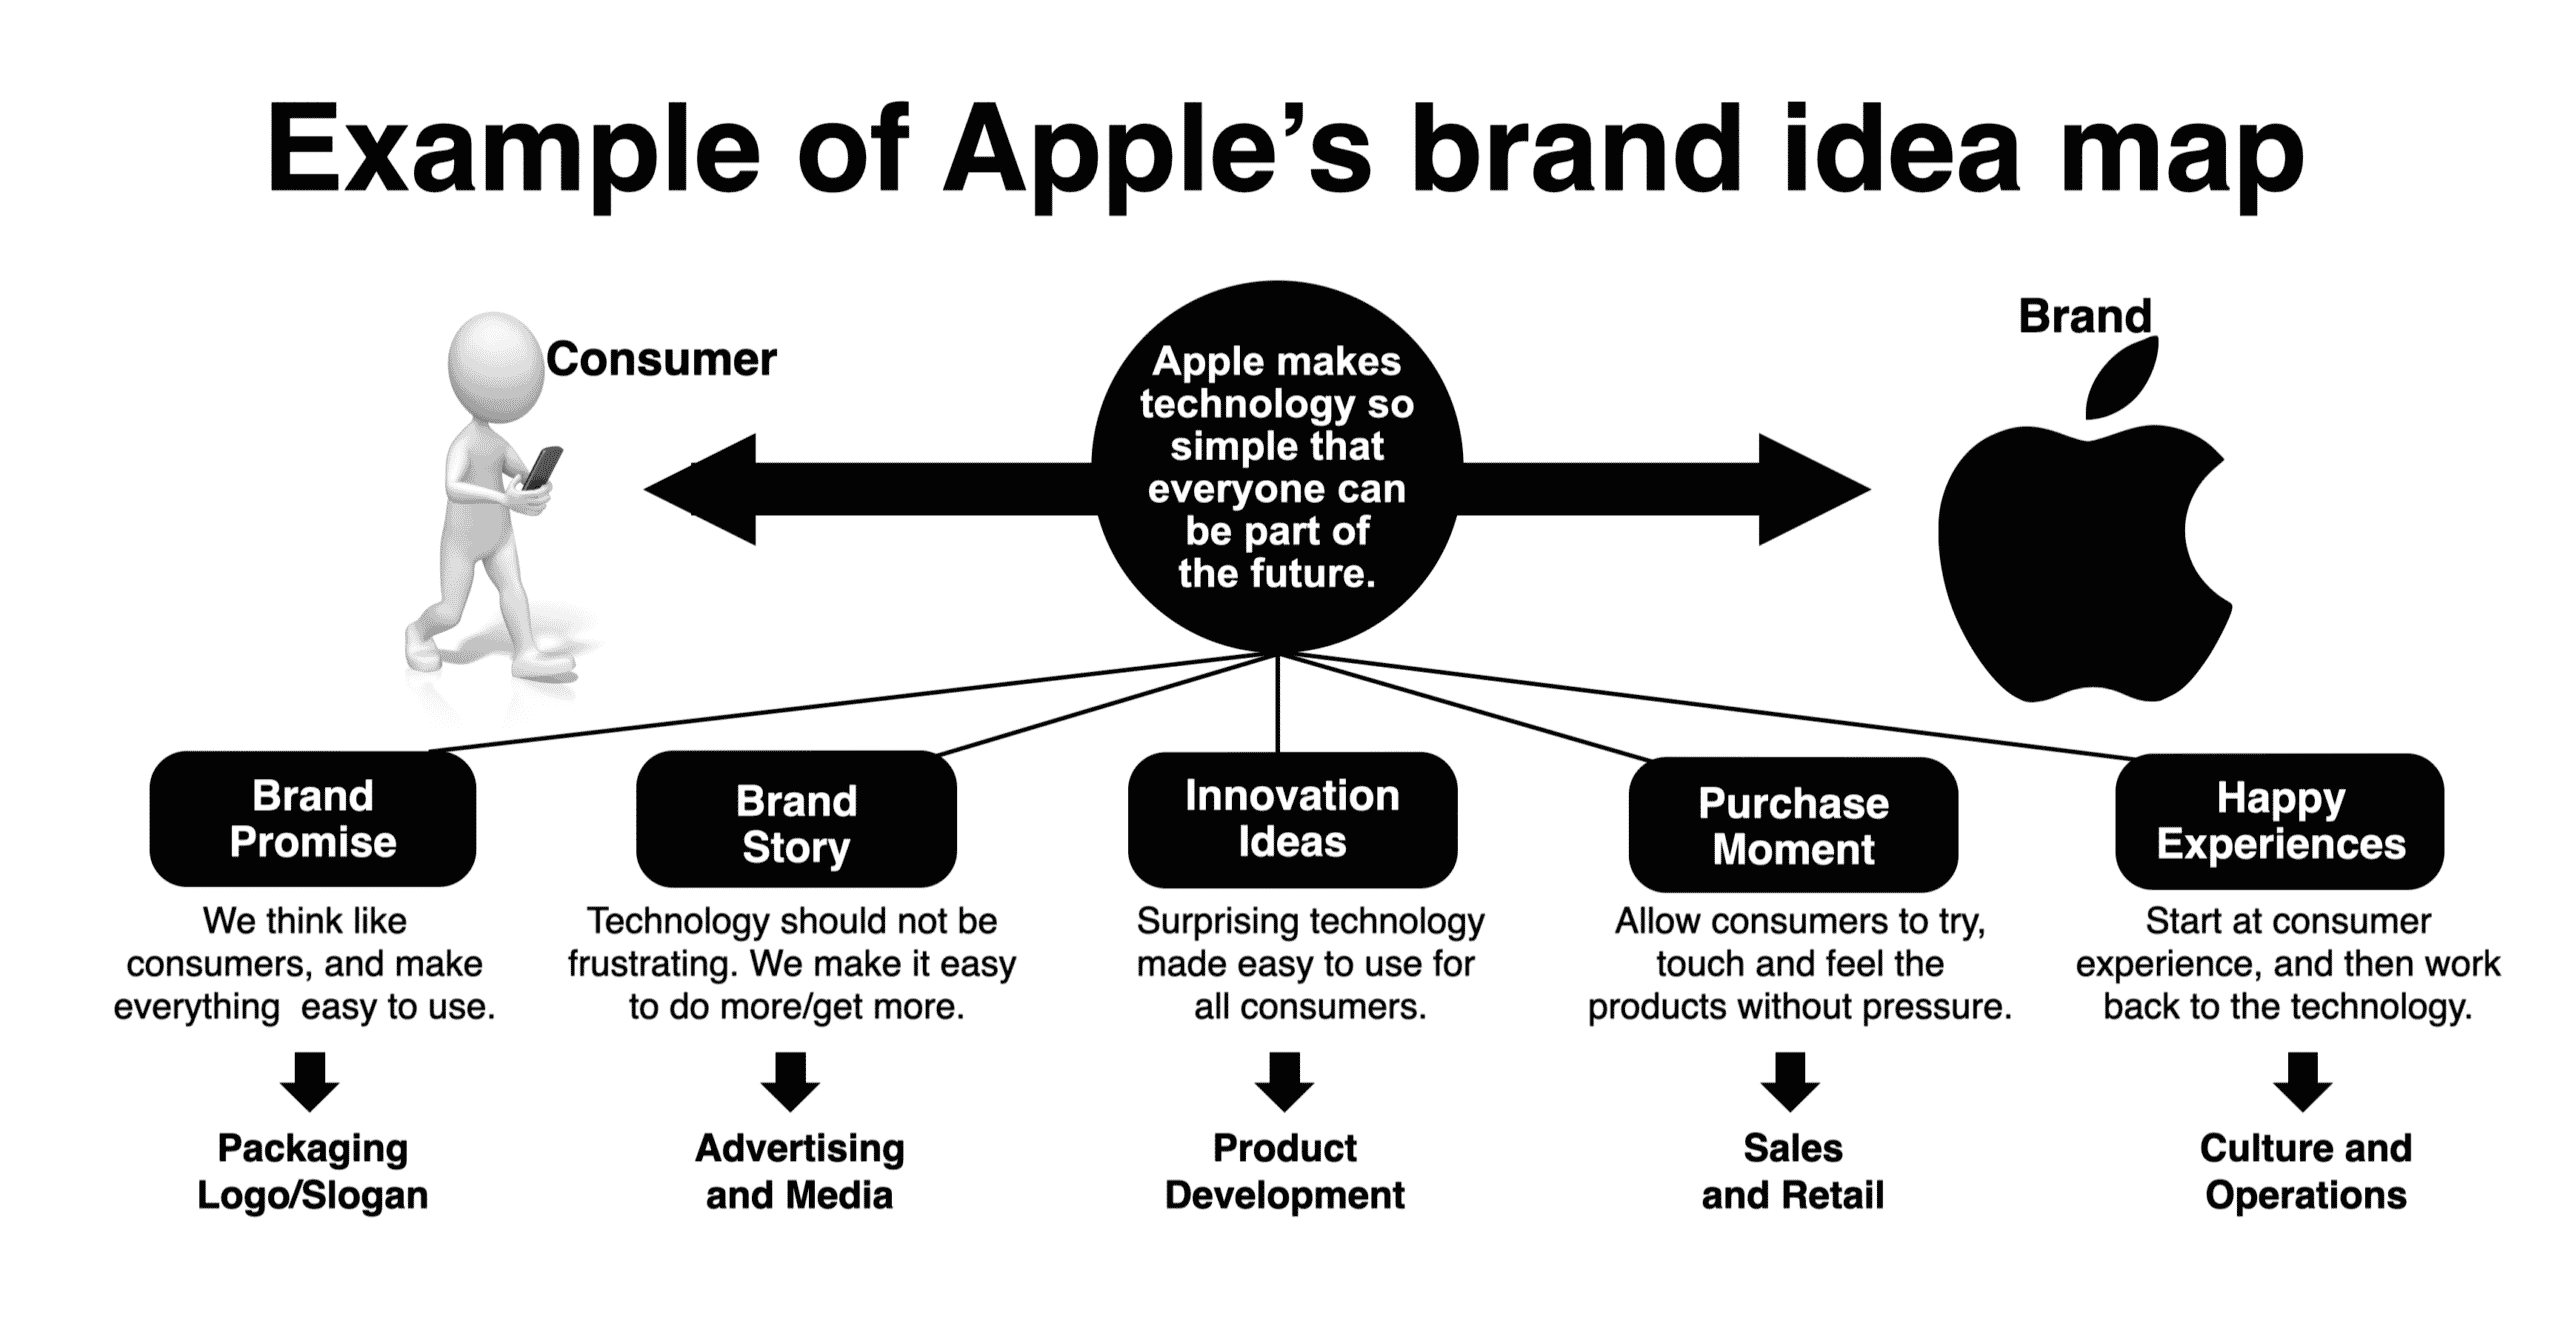 Apple's brand idea map